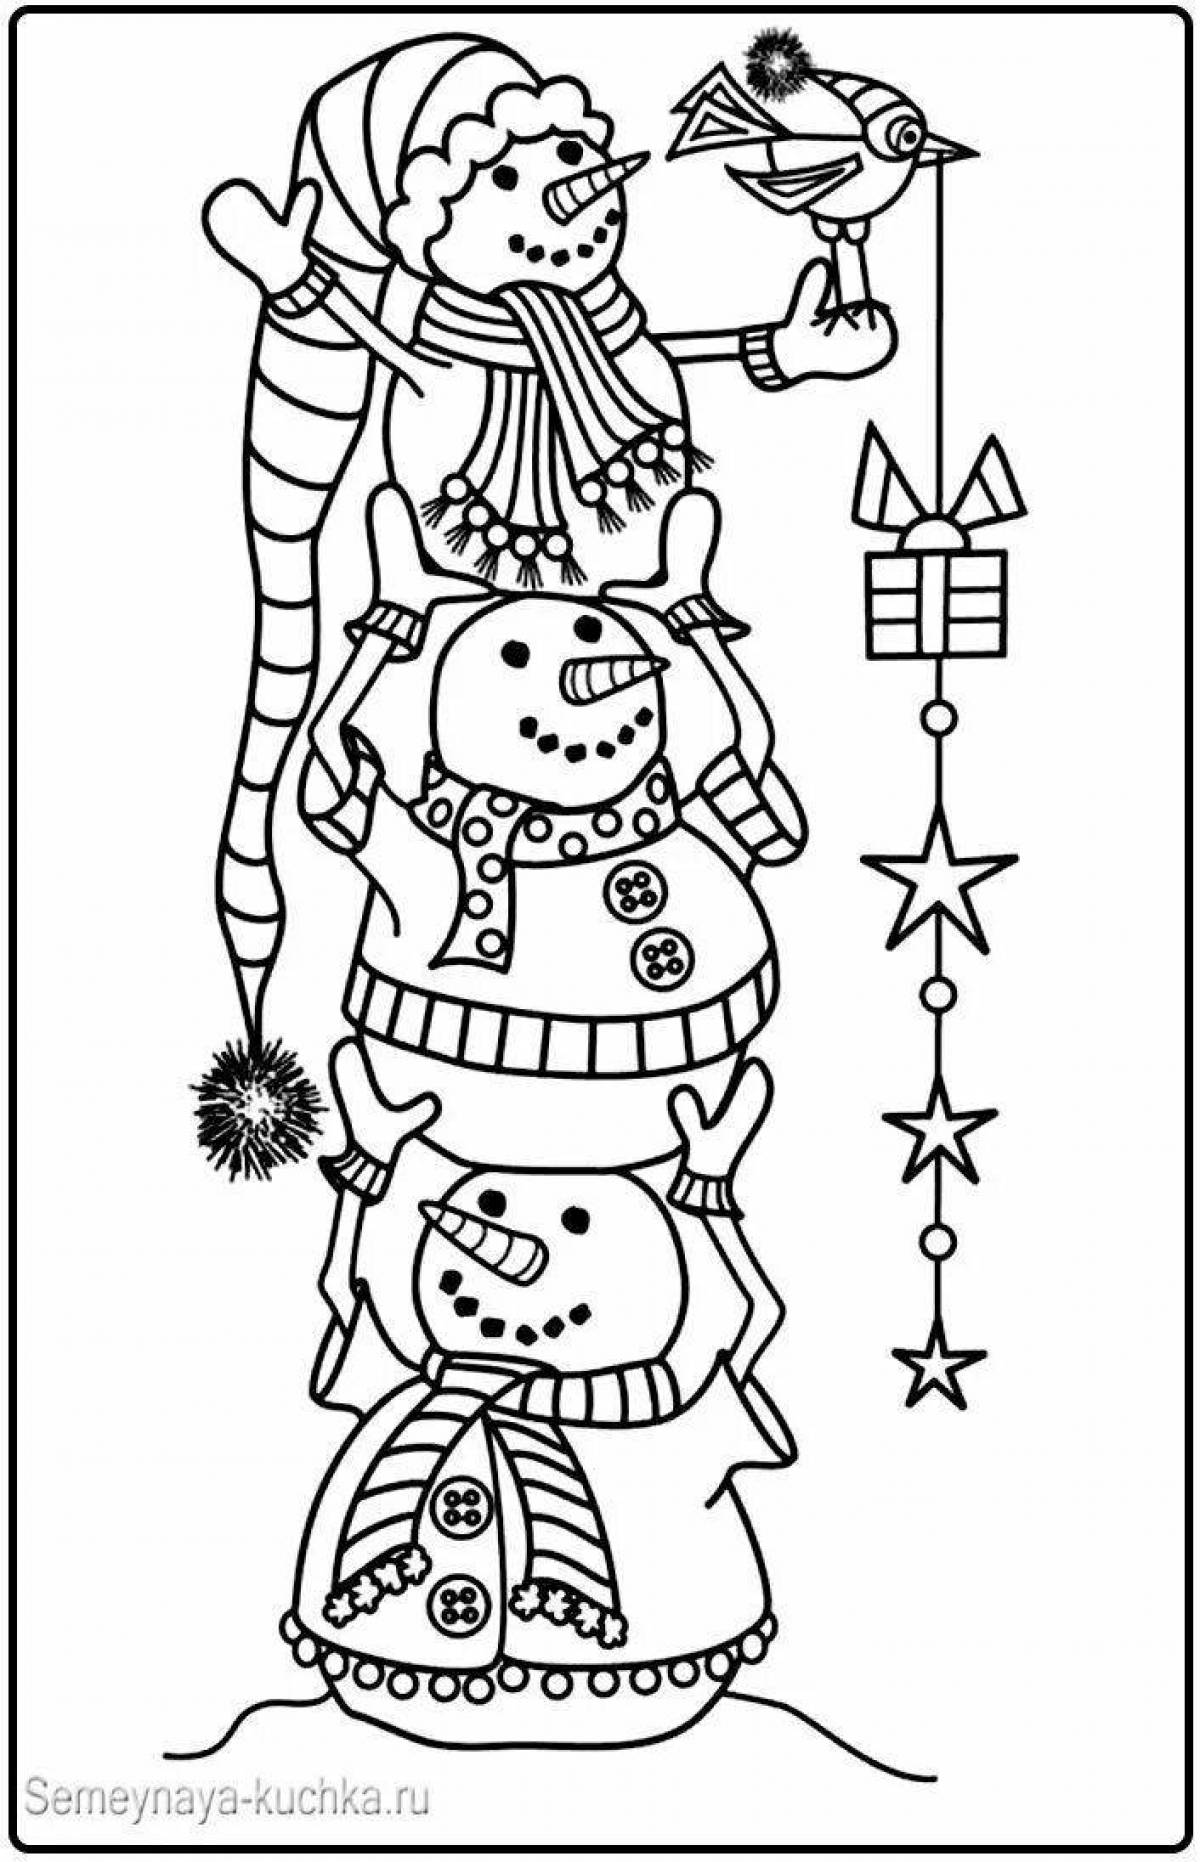 Sparkling snowman antistress coloring book